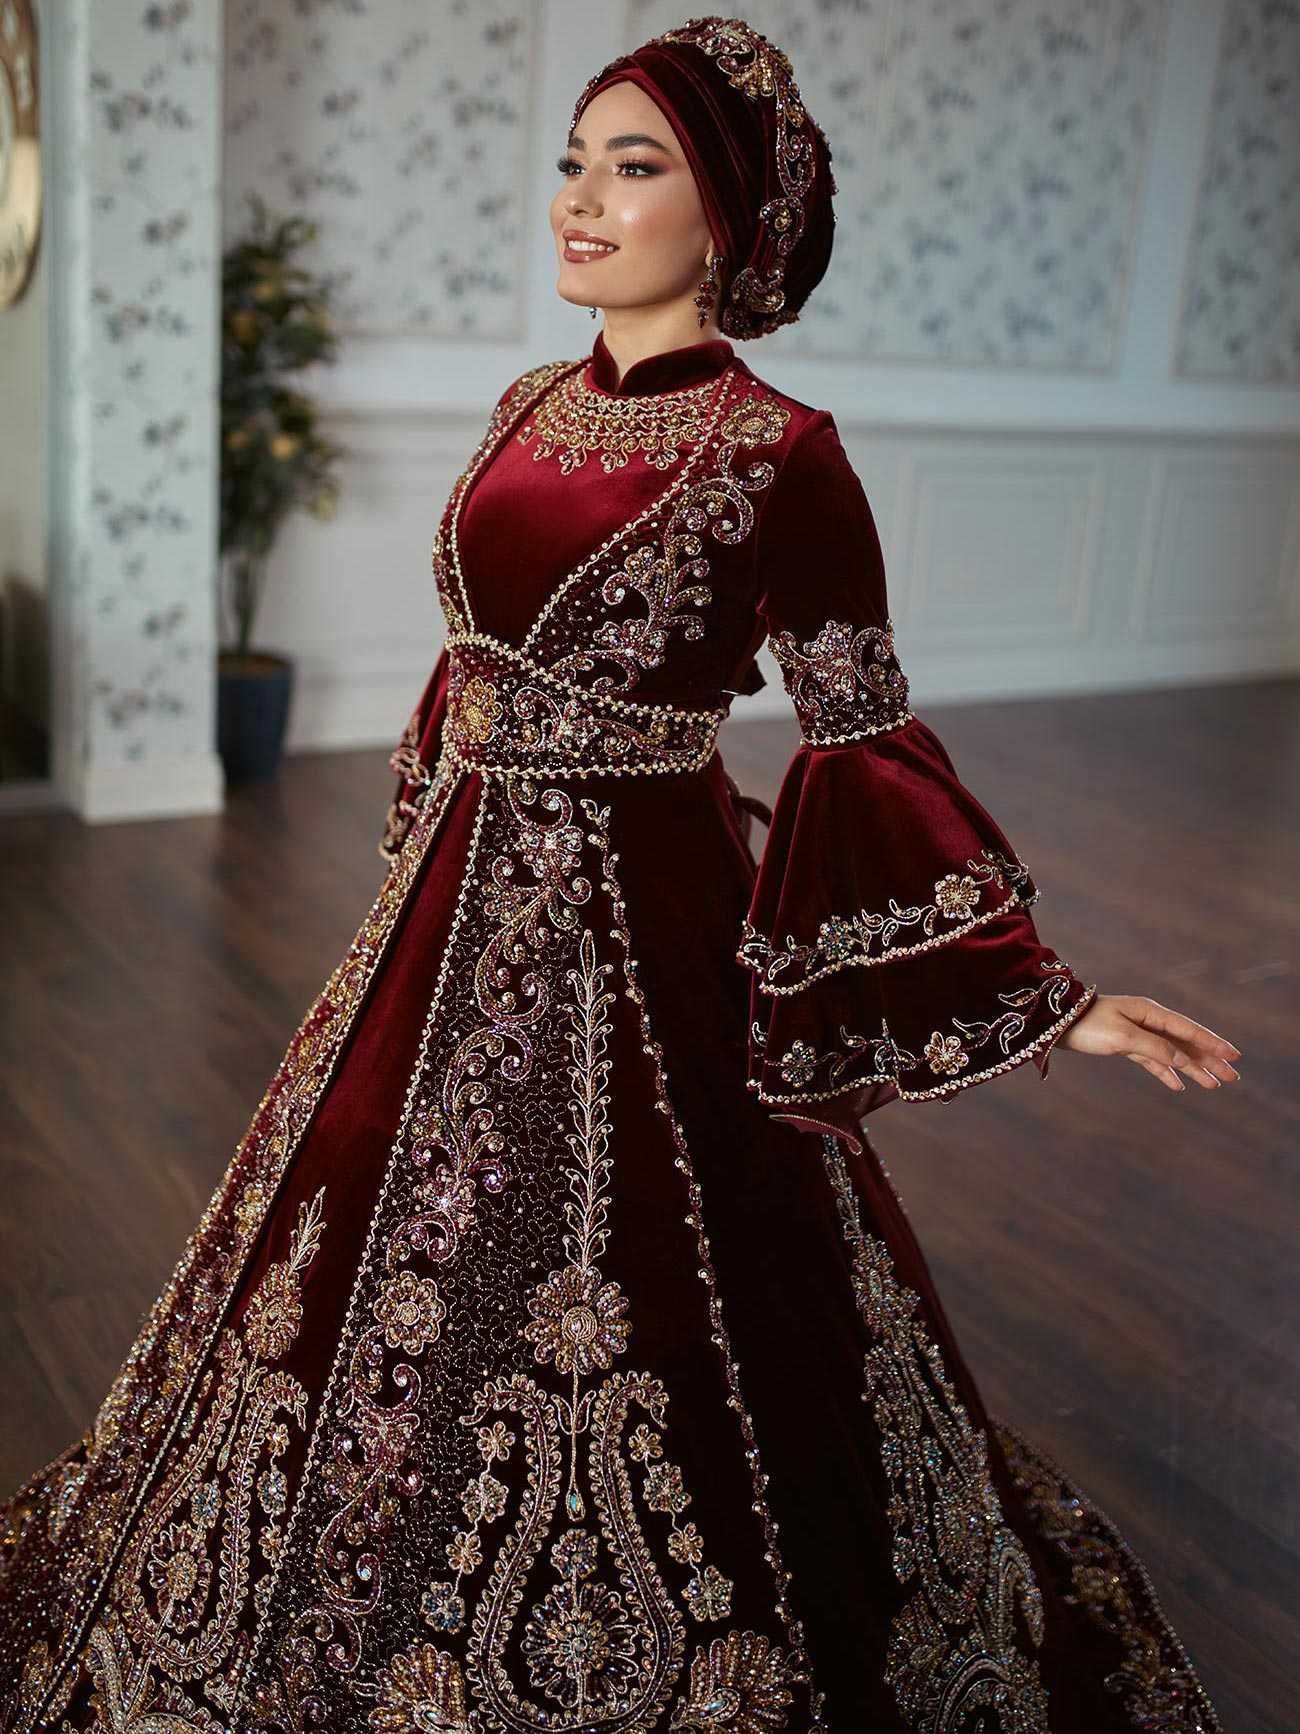 Muslim Long sleeve floor length burgundy wedding abaya embroidered hijab dress for henna night (2)